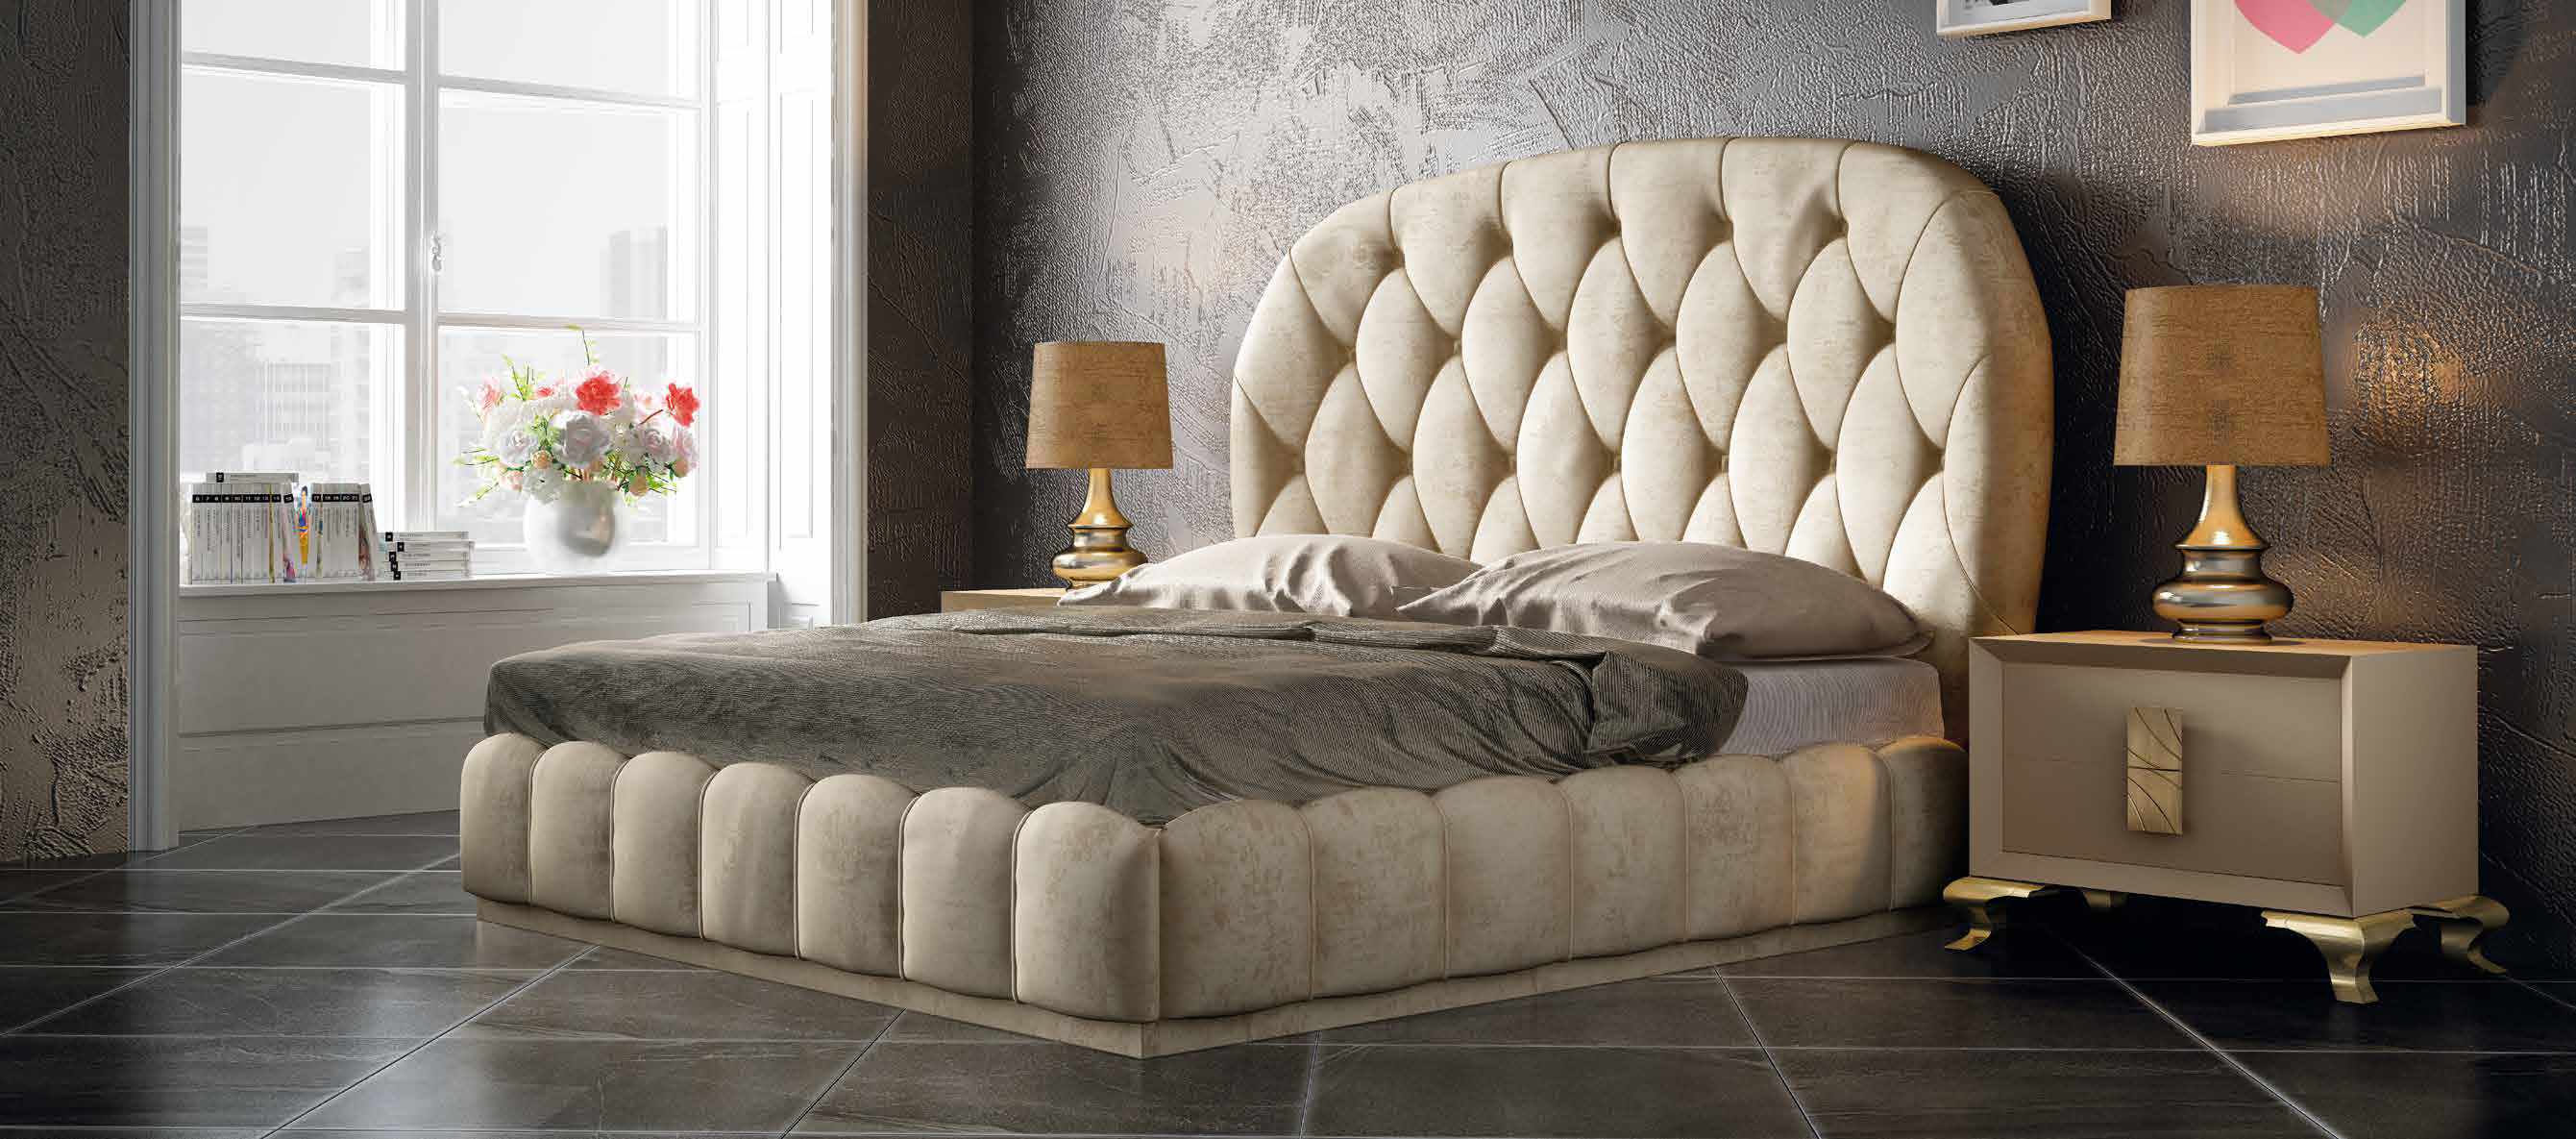 Brands Franco Furniture Bedrooms vol3, Spain DOR 62